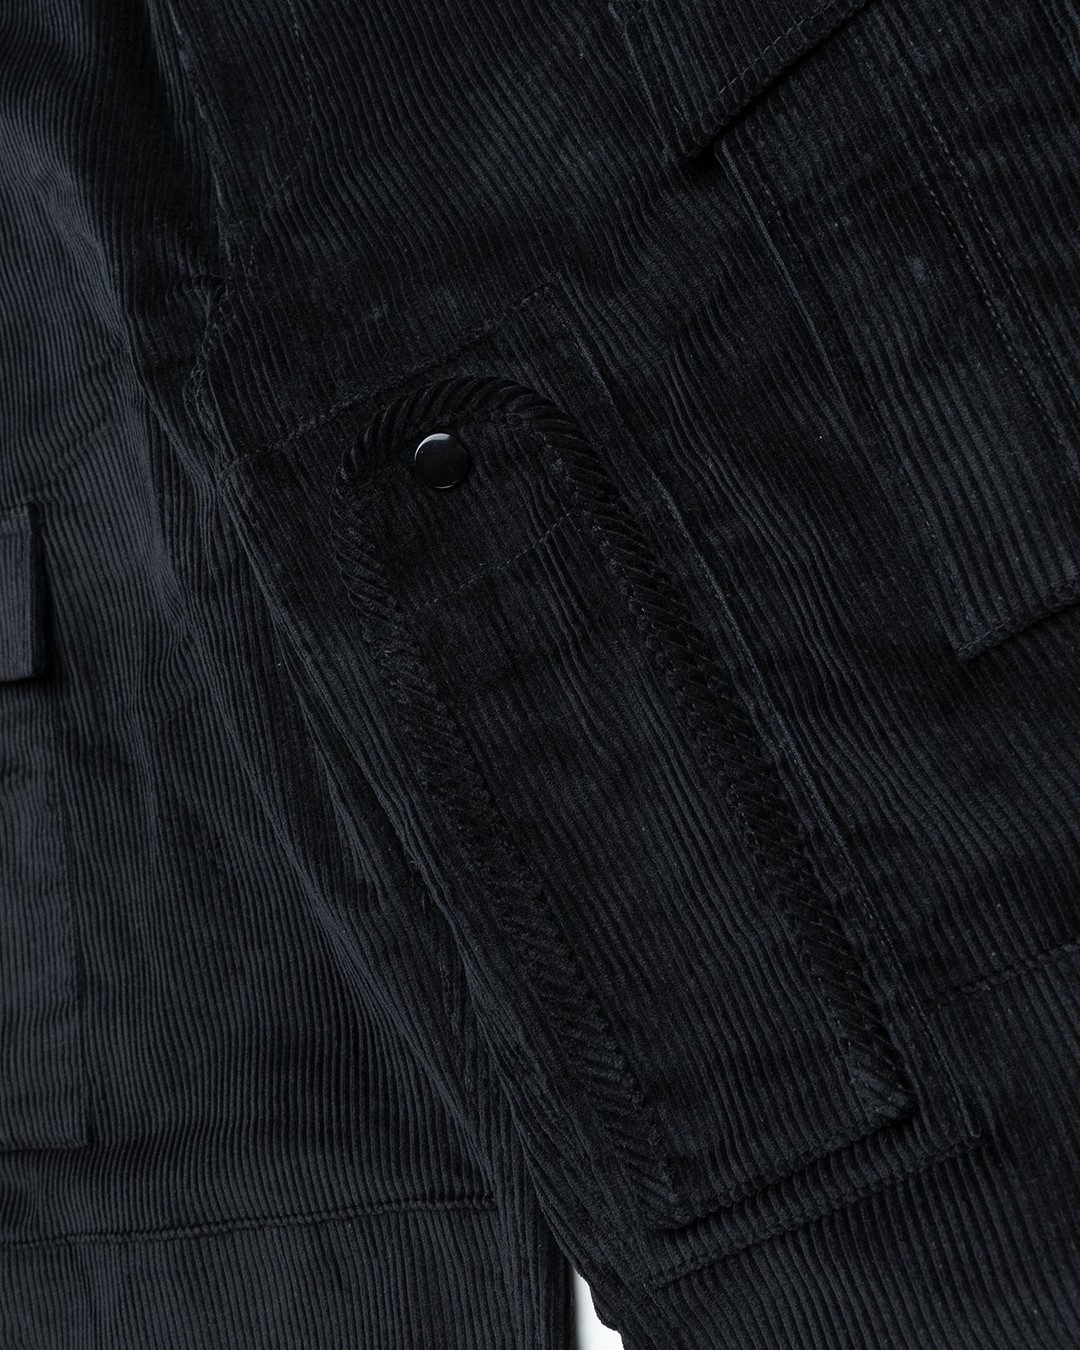 Winnie New York – Corduroy Cargo Black - Pants - Black - Image 4